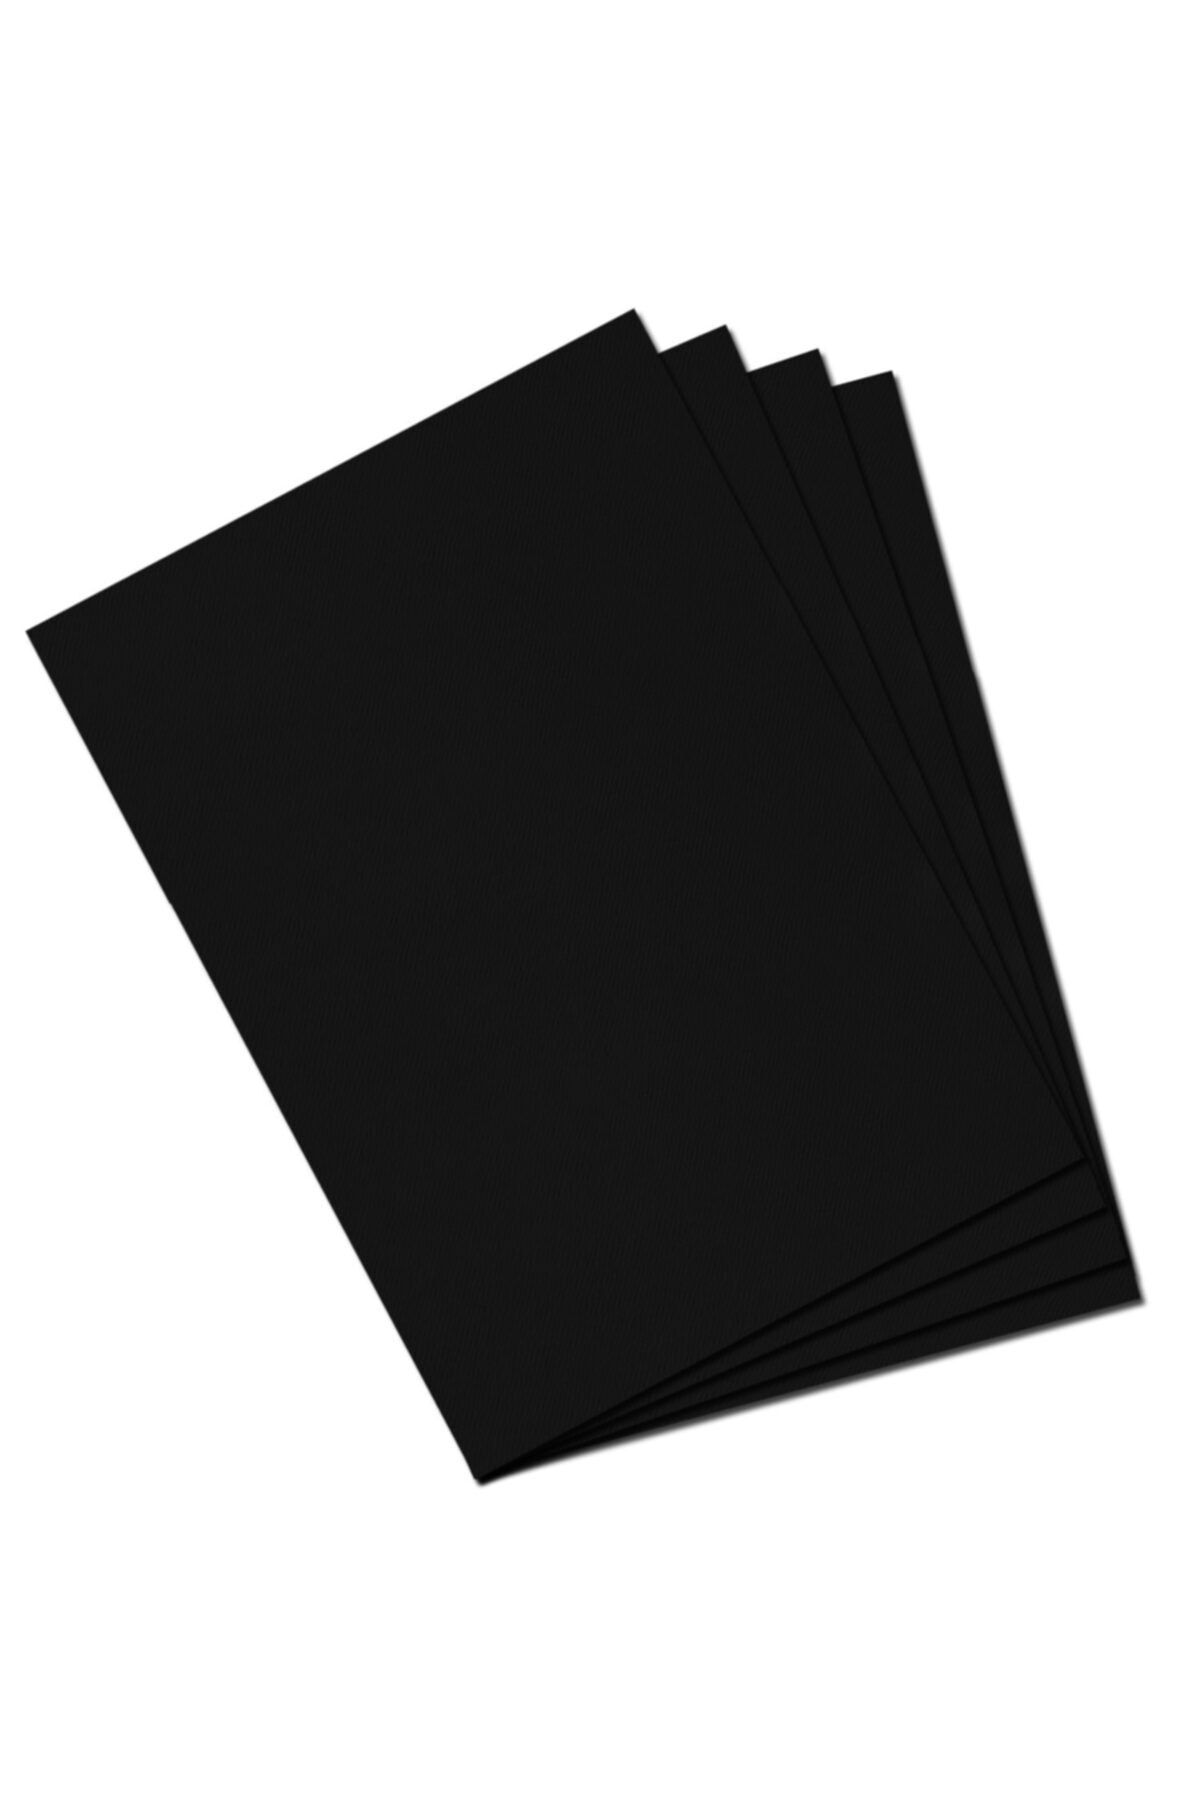 DEFNE DEFTER Metalik Aynalı Siyah Renkli 20 Adet 50x70 Cm Aynalı Fon Kartonu A Kalite